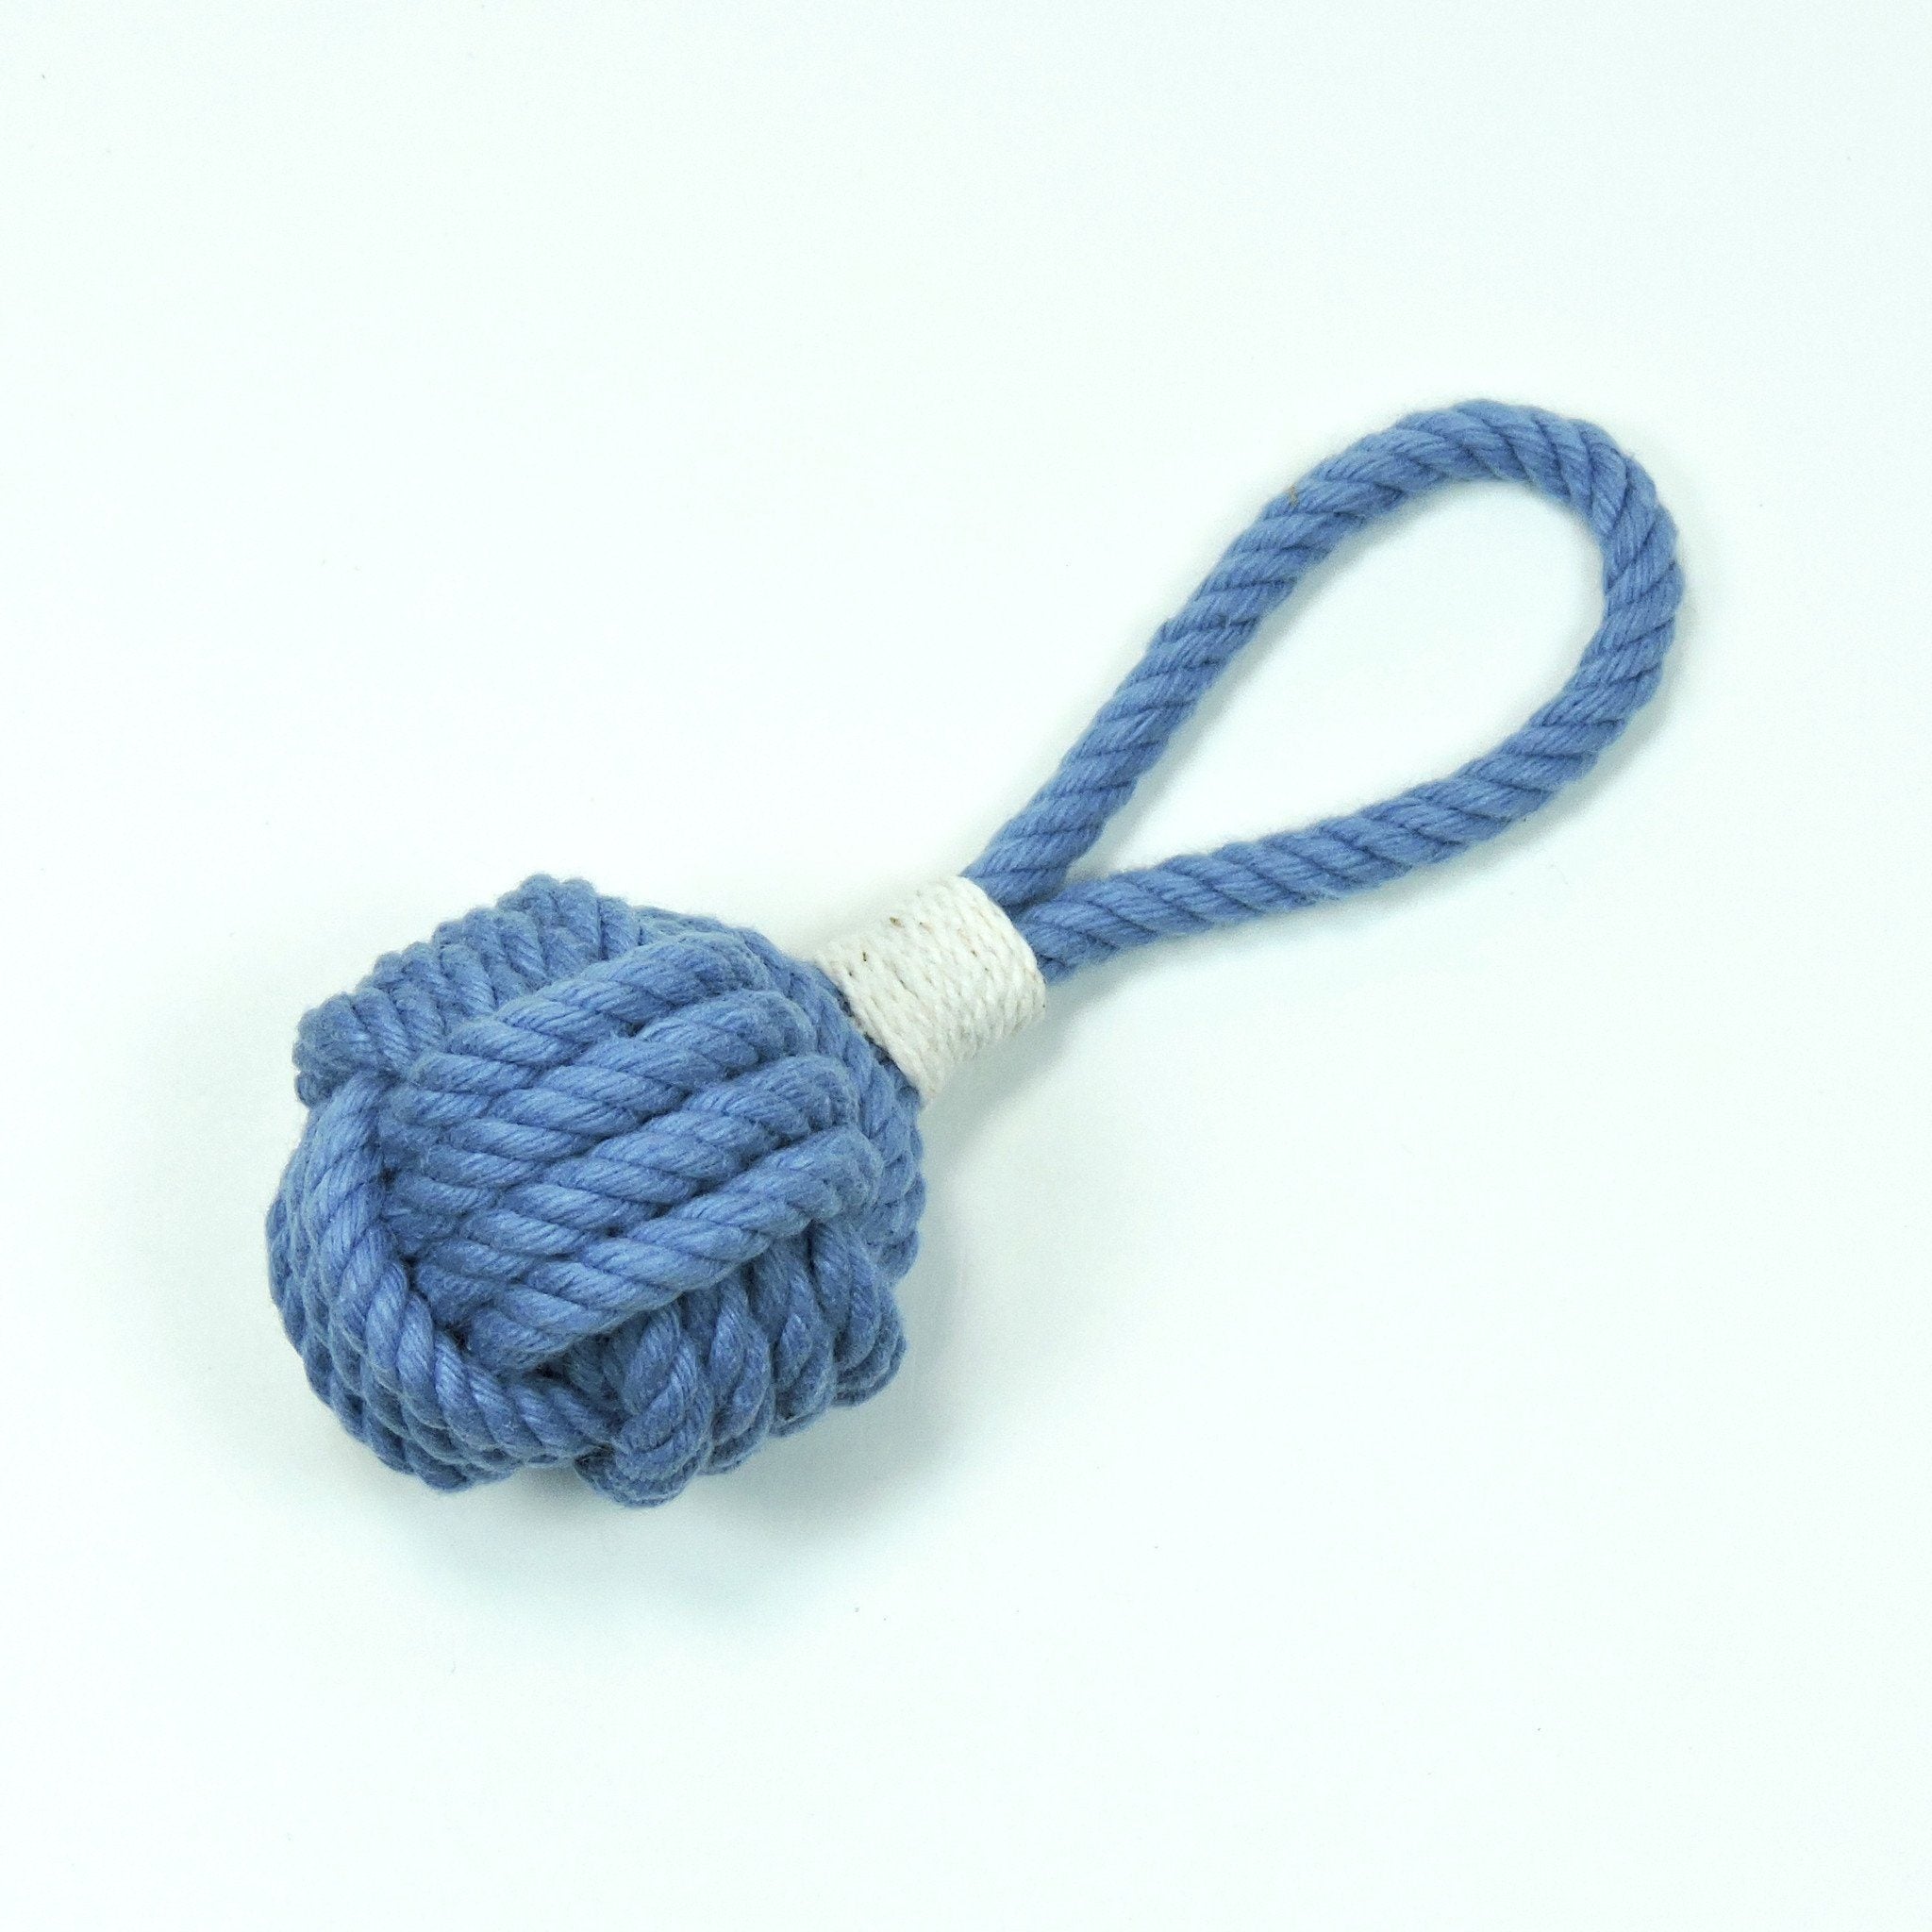 4.5 Monkey Fist/Paw Rope Knot Decoration - Blue